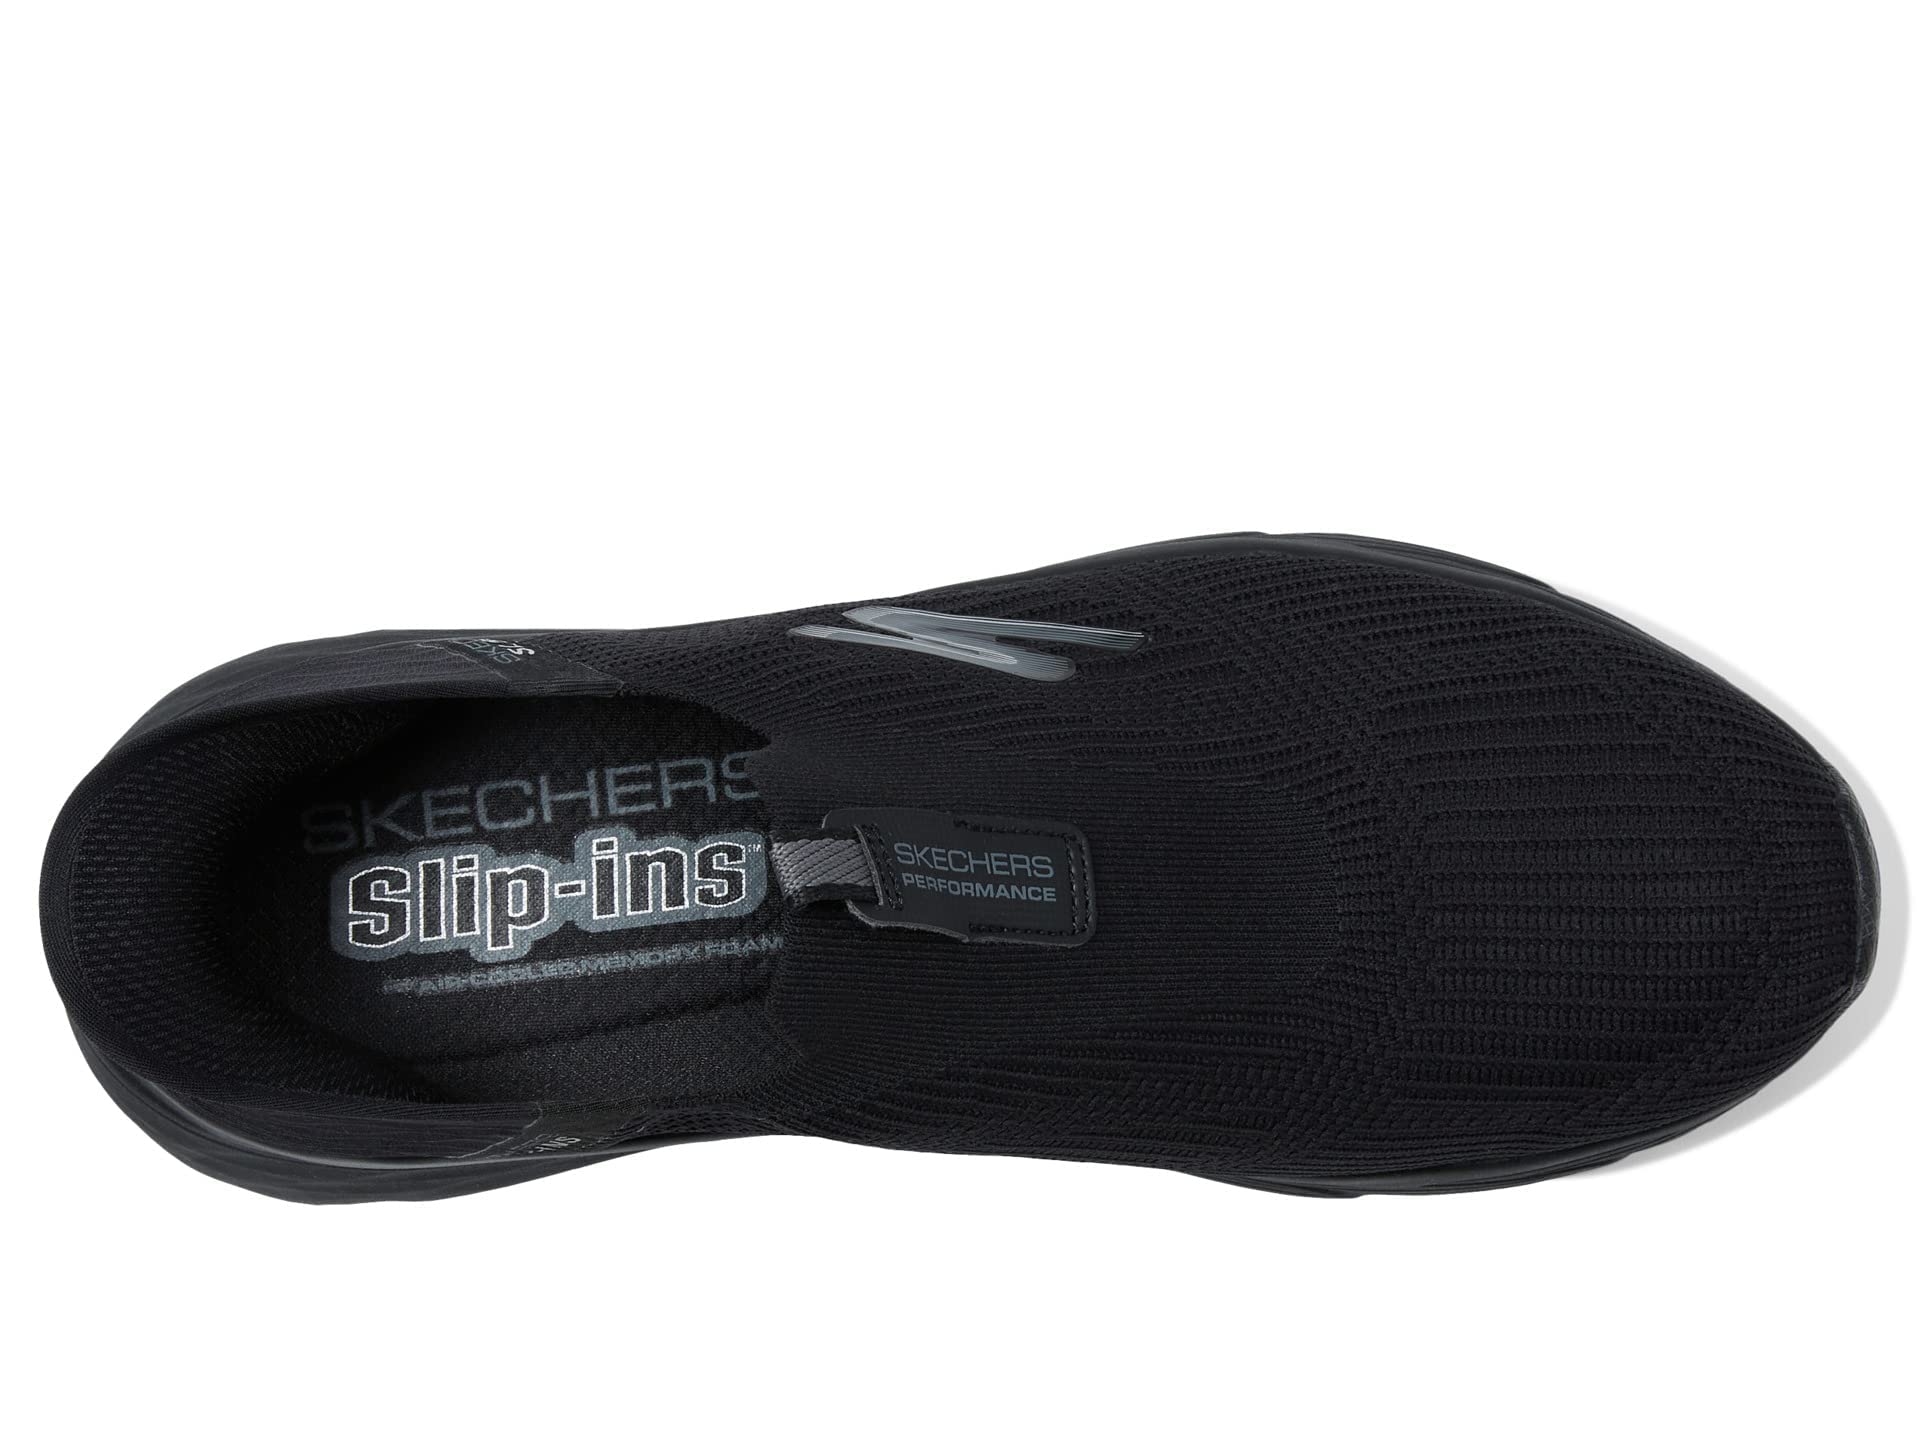 Skechers Men's Max Cushioning Slip-ins-Athletic Slip-on Running Walking Shoes with Memory Foam Sneaker